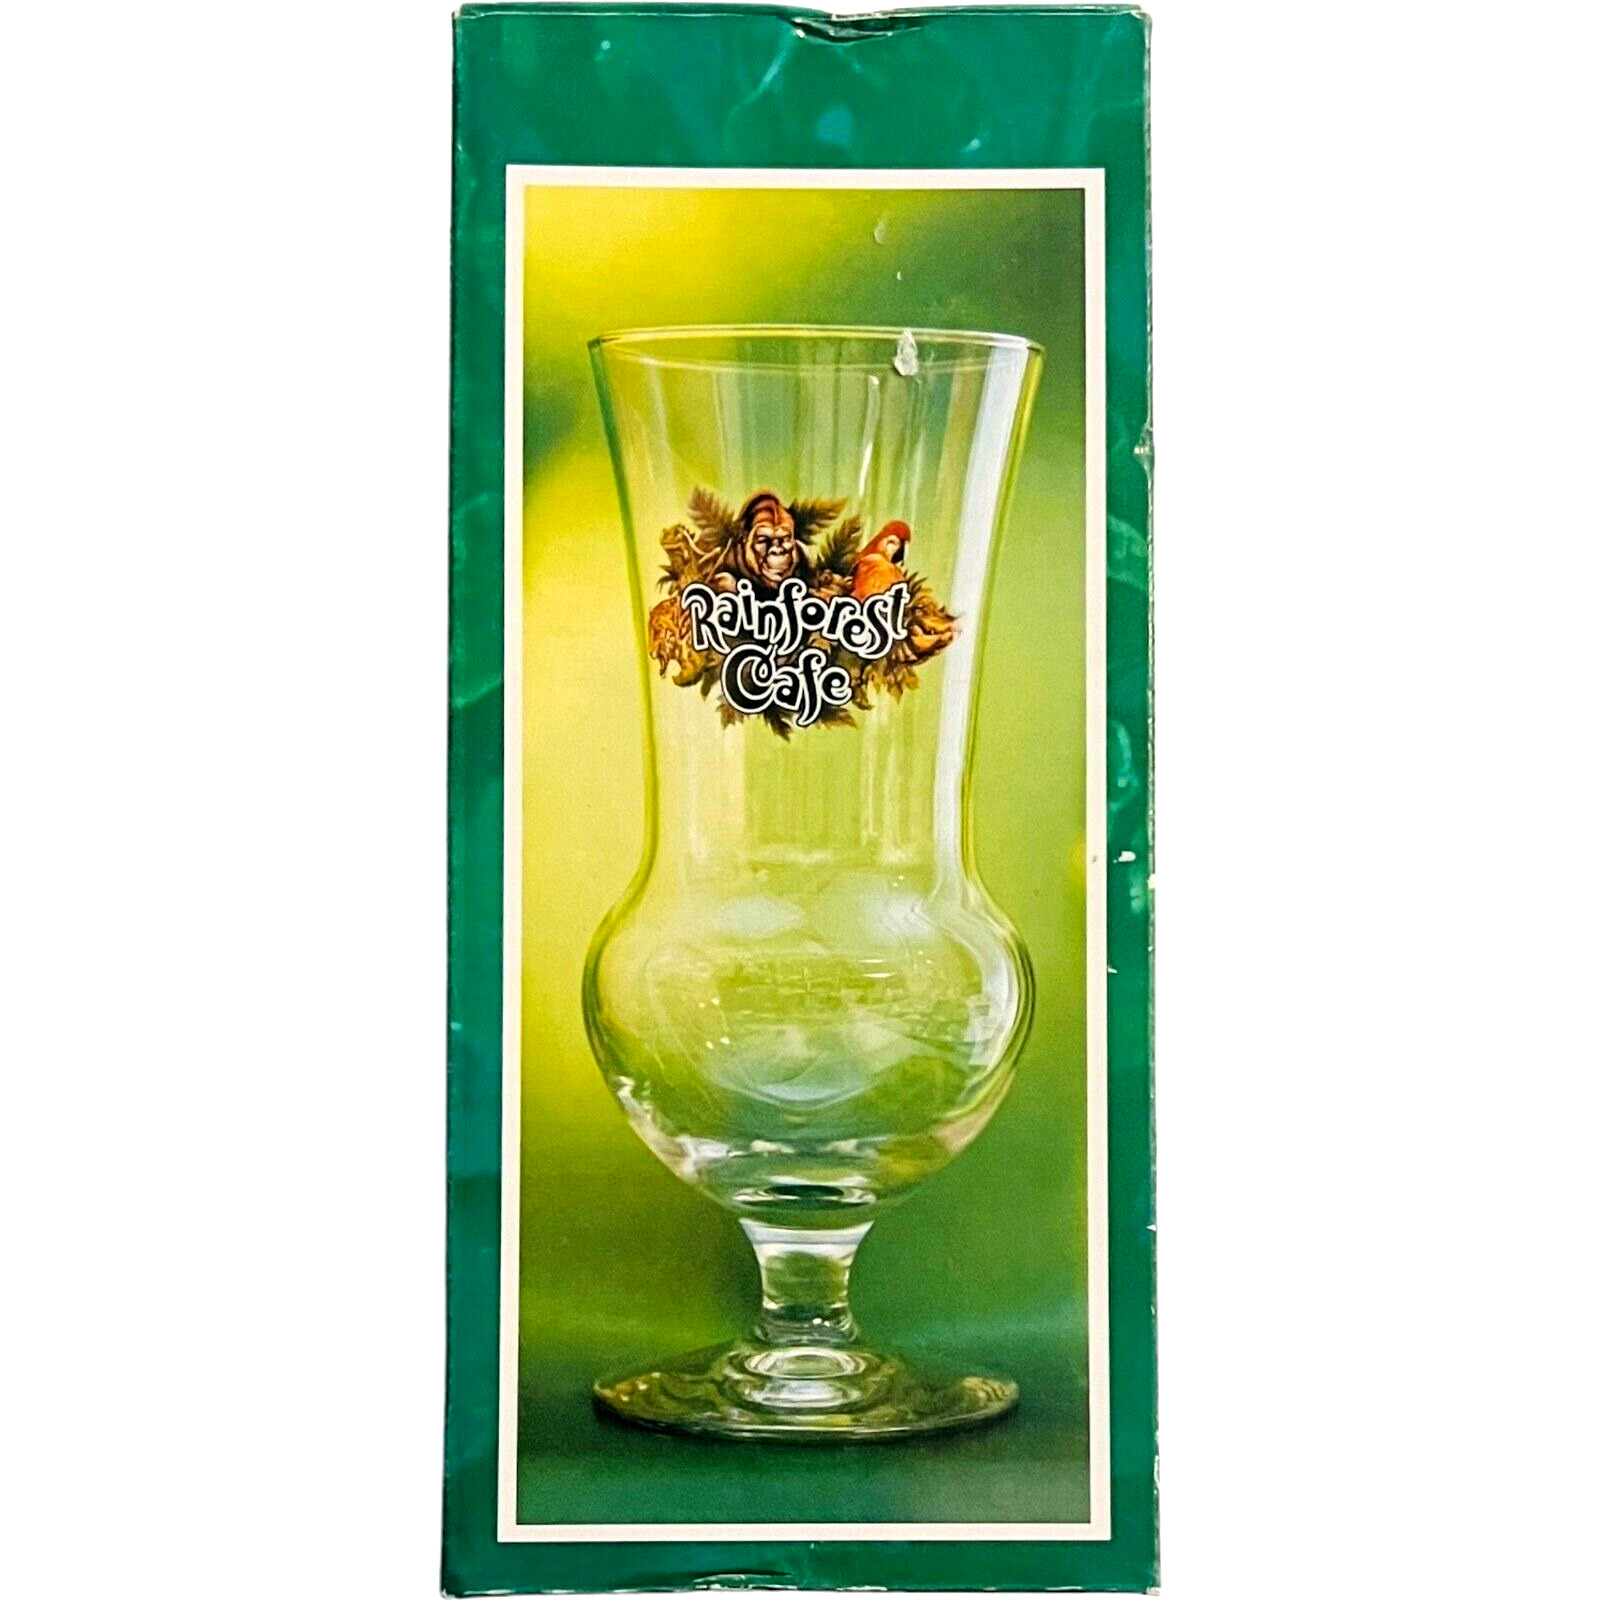 Rainforest Cafe Glass in Original Packaging / NEW